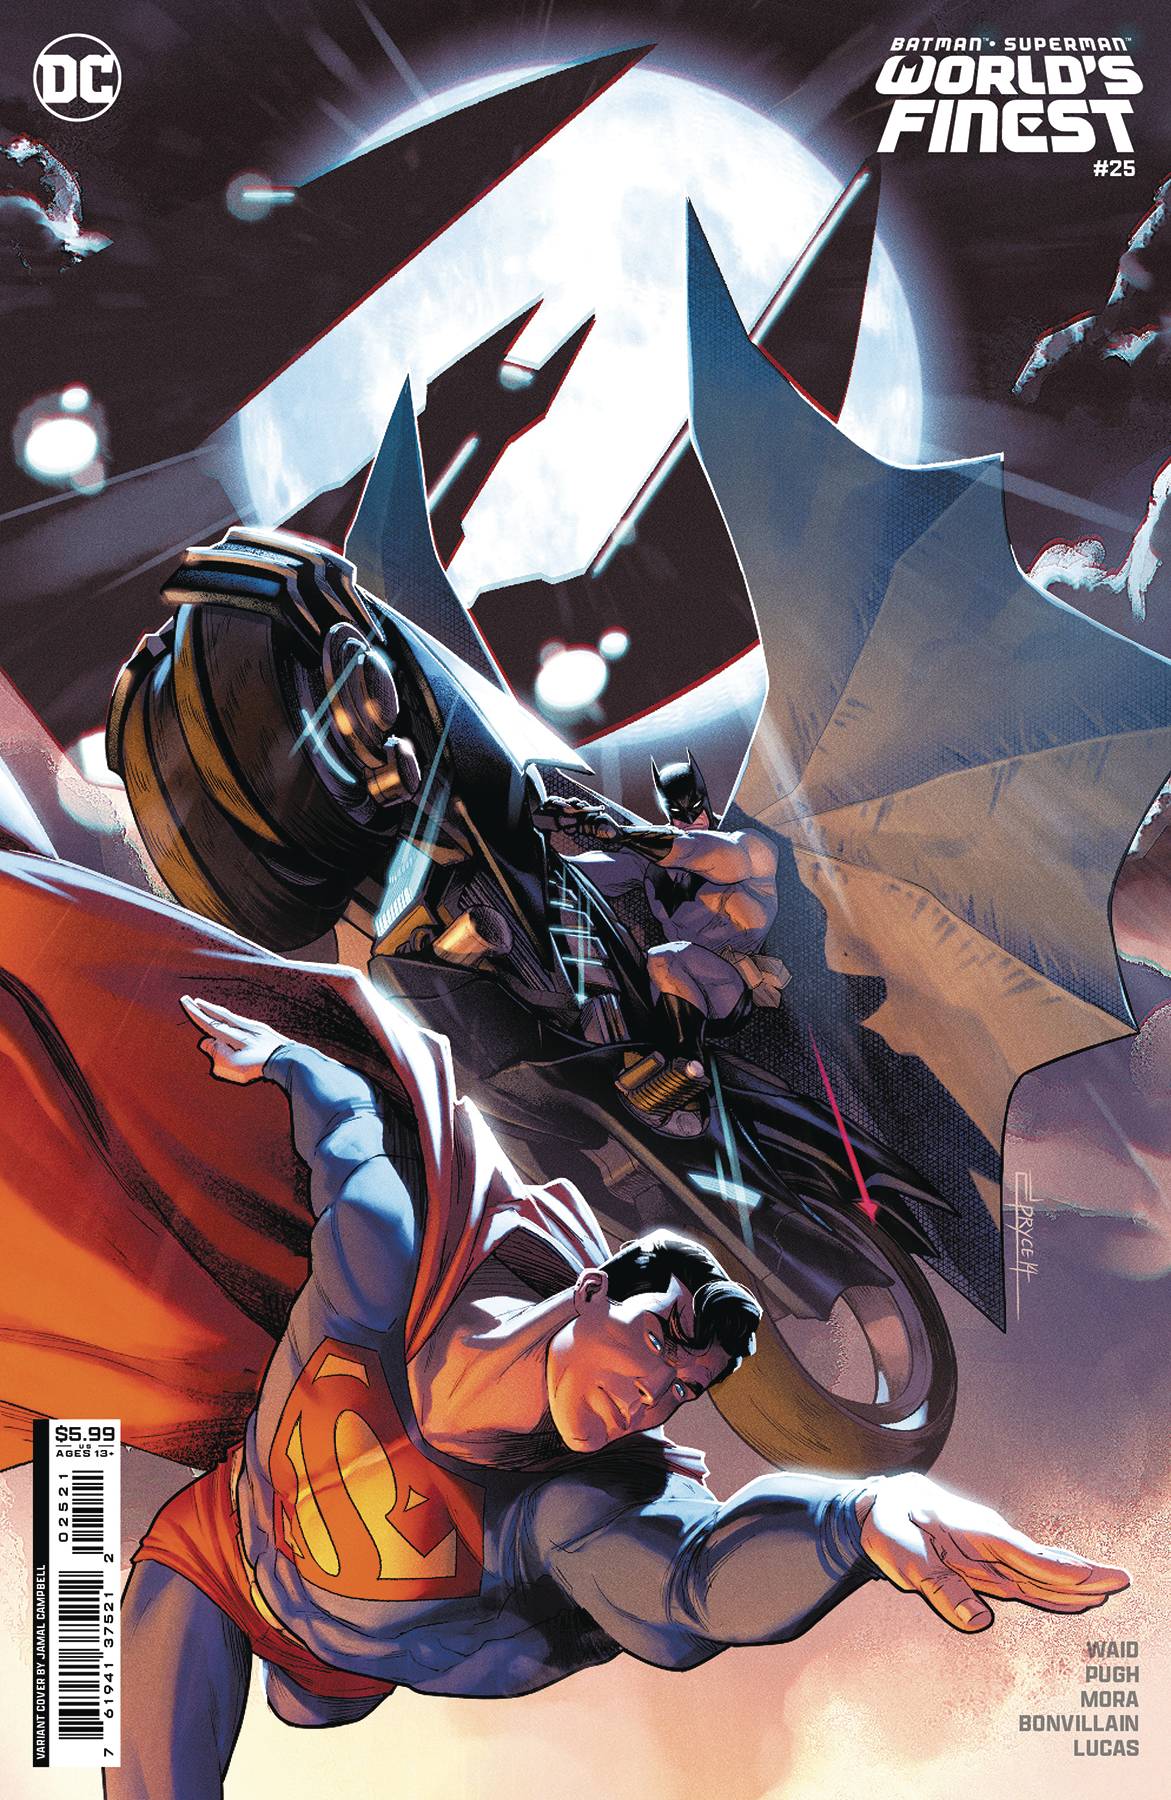 BATMAN SUPERMAN WORLDS FINEST #25 CVR B JAMAL CAMPBELL - PRE ORDER [FOC 24.02]